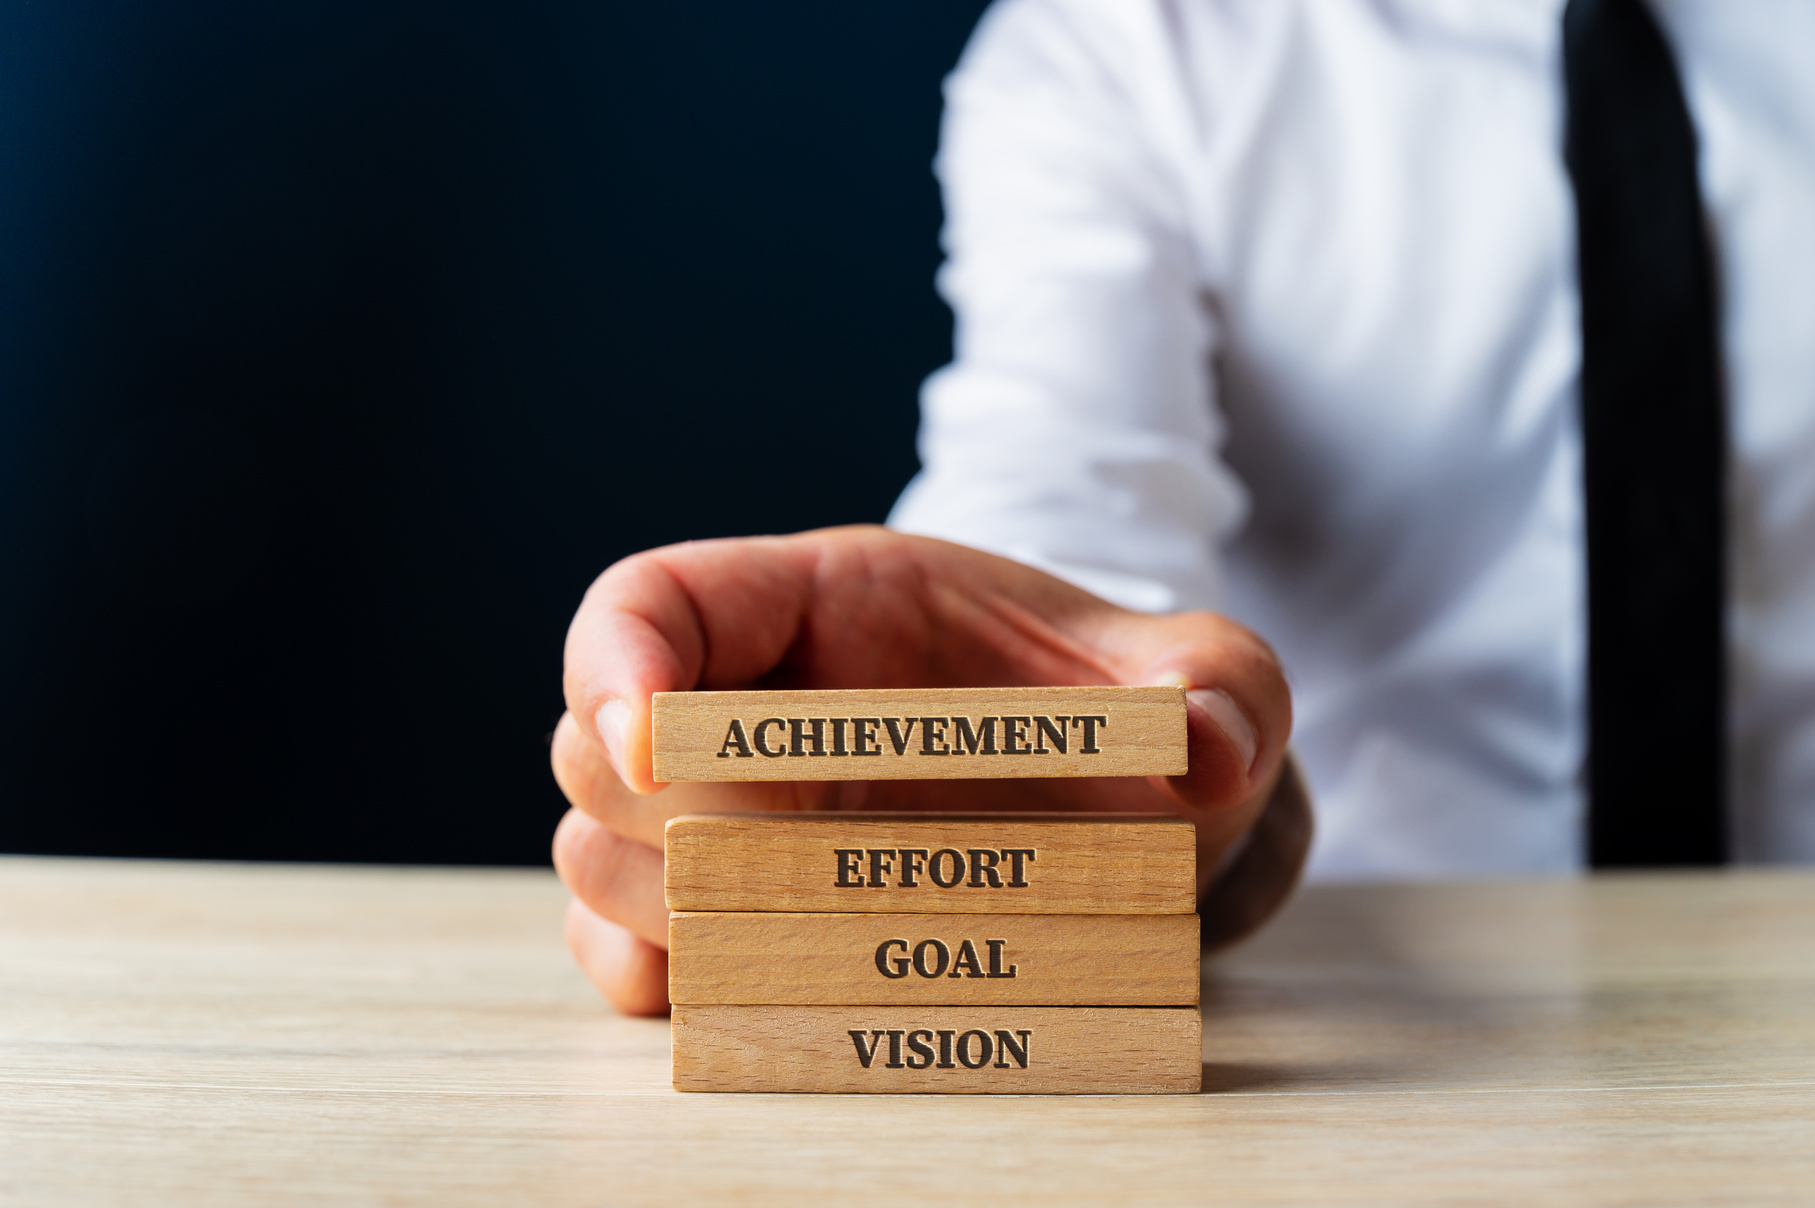 Words for Business Success - Vision, Goal, Effort and Achievemen